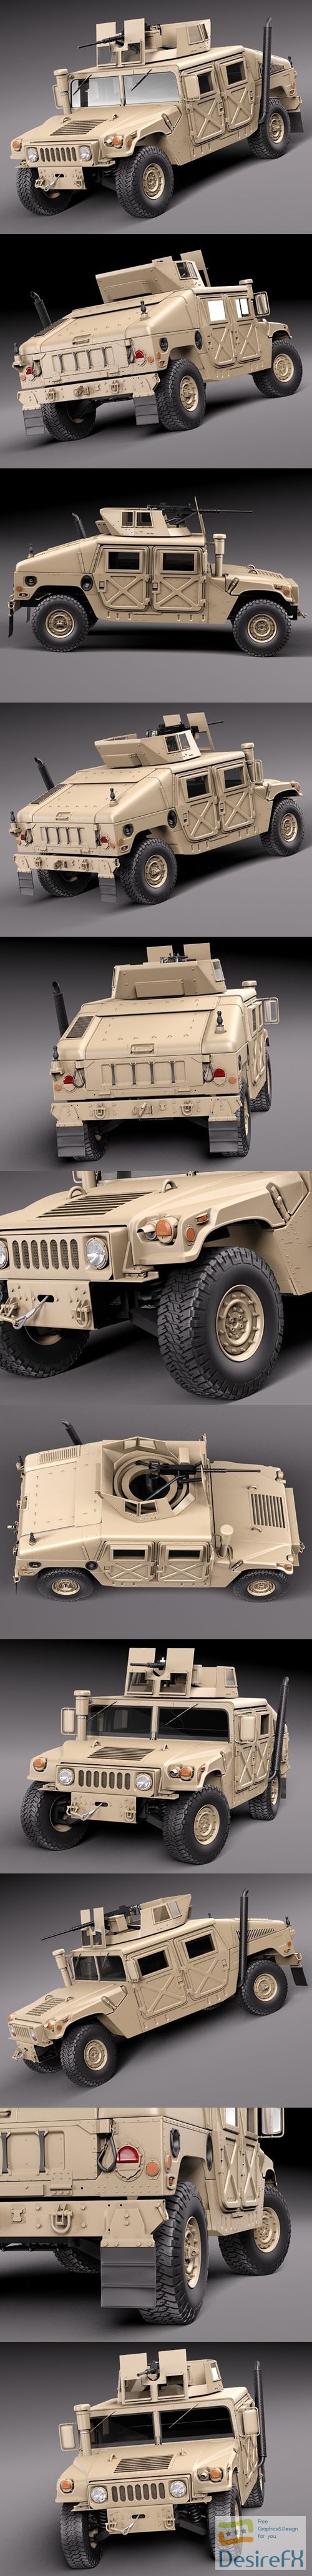 HMMWV Humvee Hummer Military Vechicle 3D Model